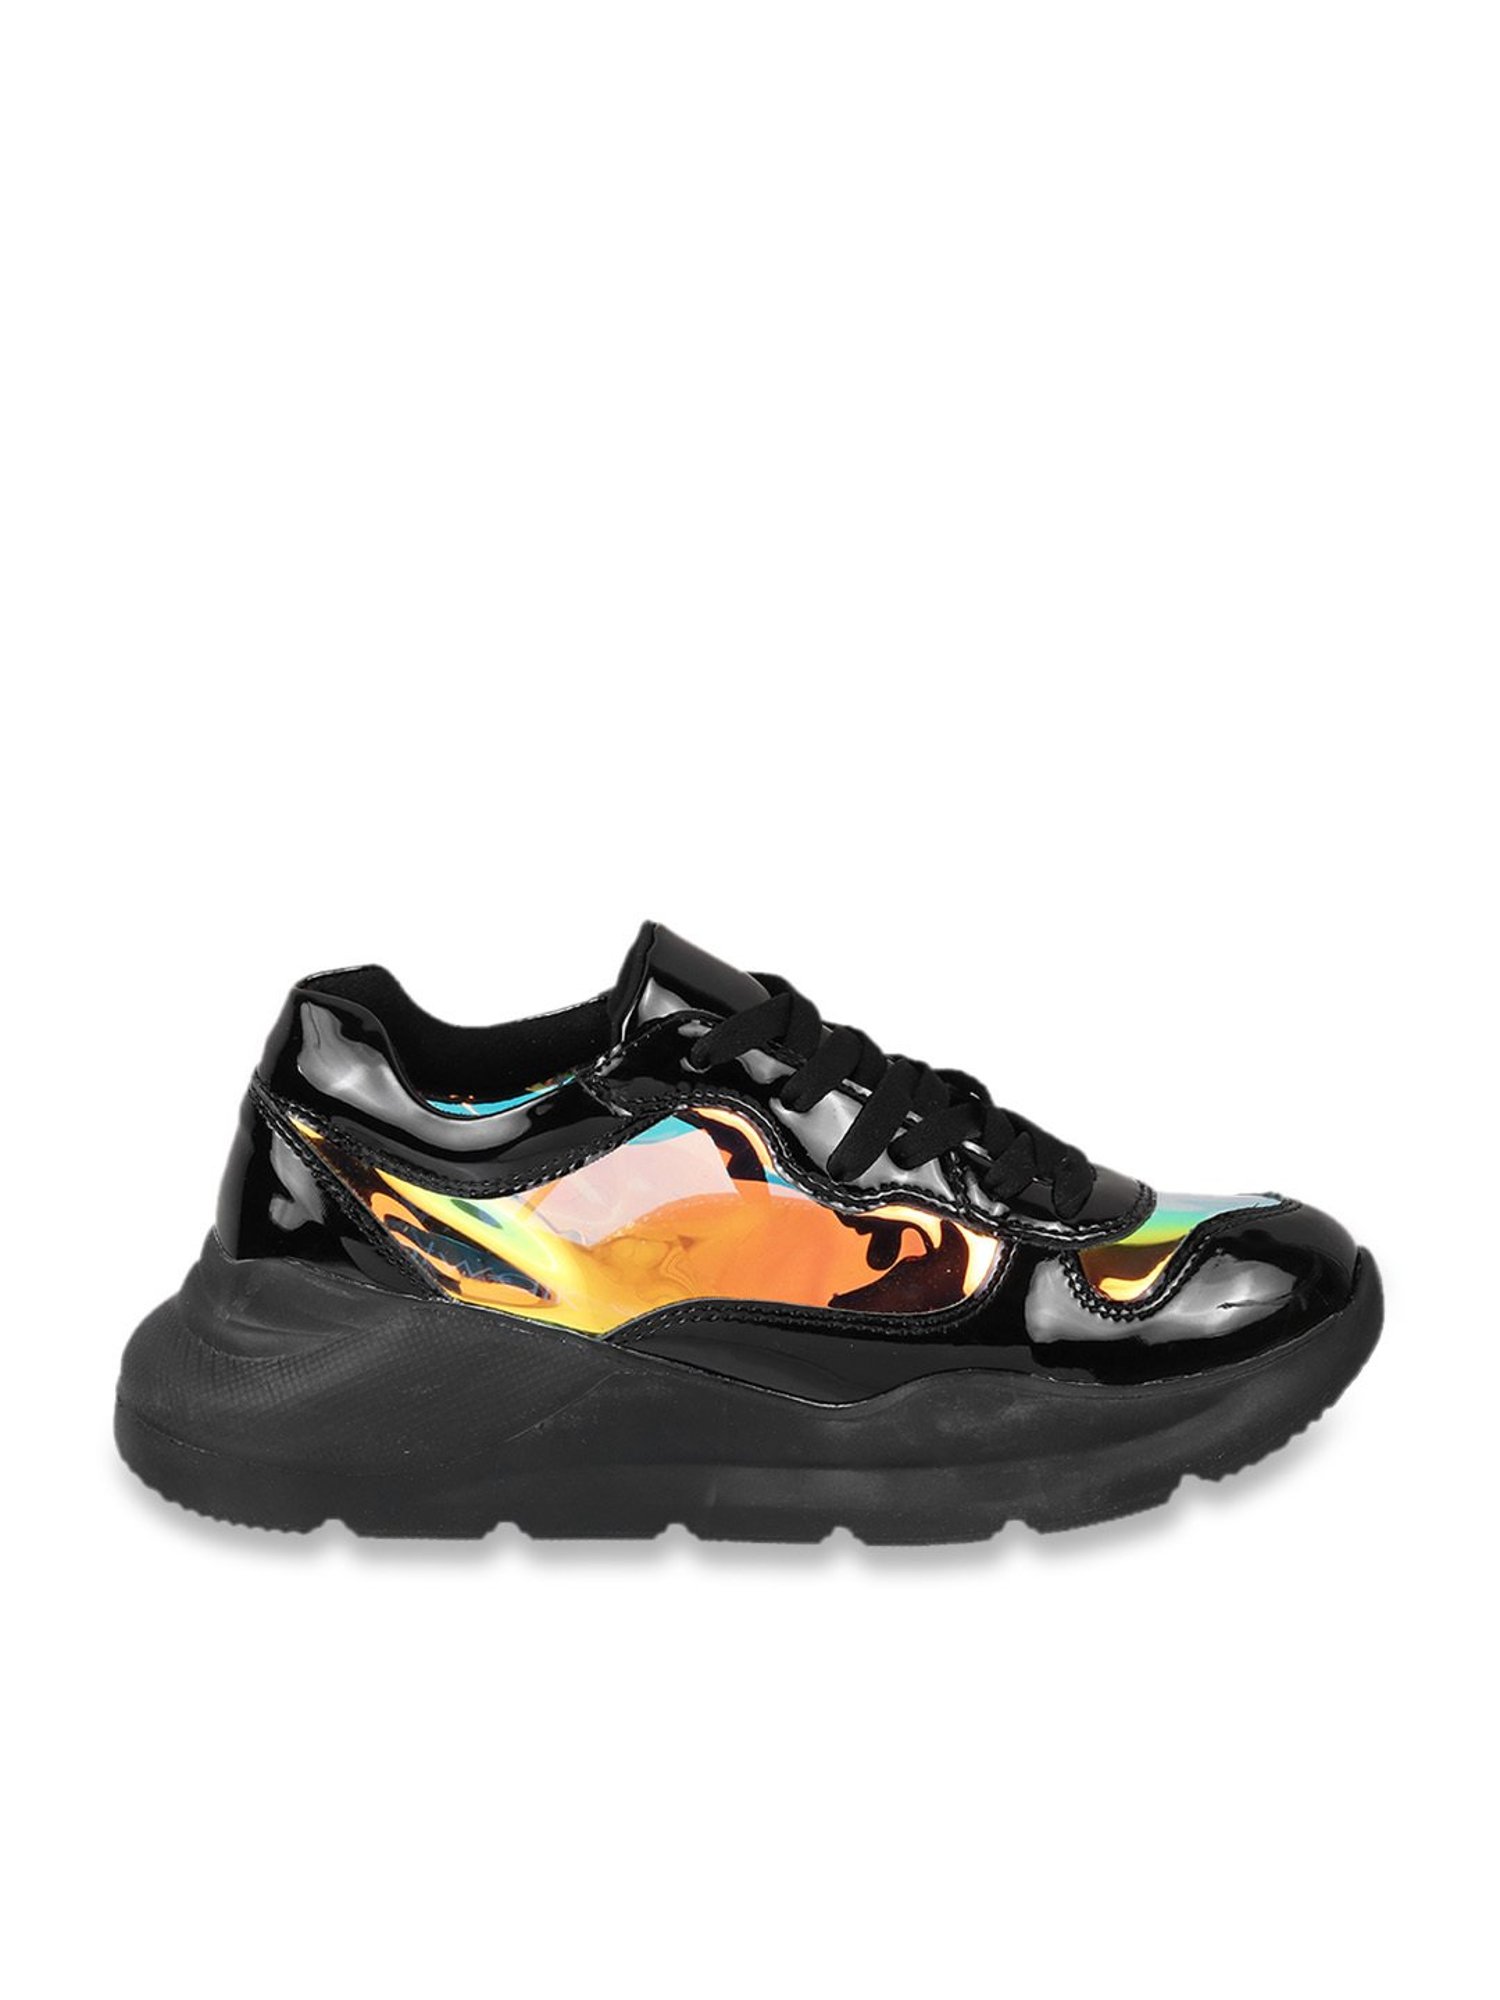 Buy Catwalk Women's Black Running Shoes for Women at Best Price Tata CLiQ